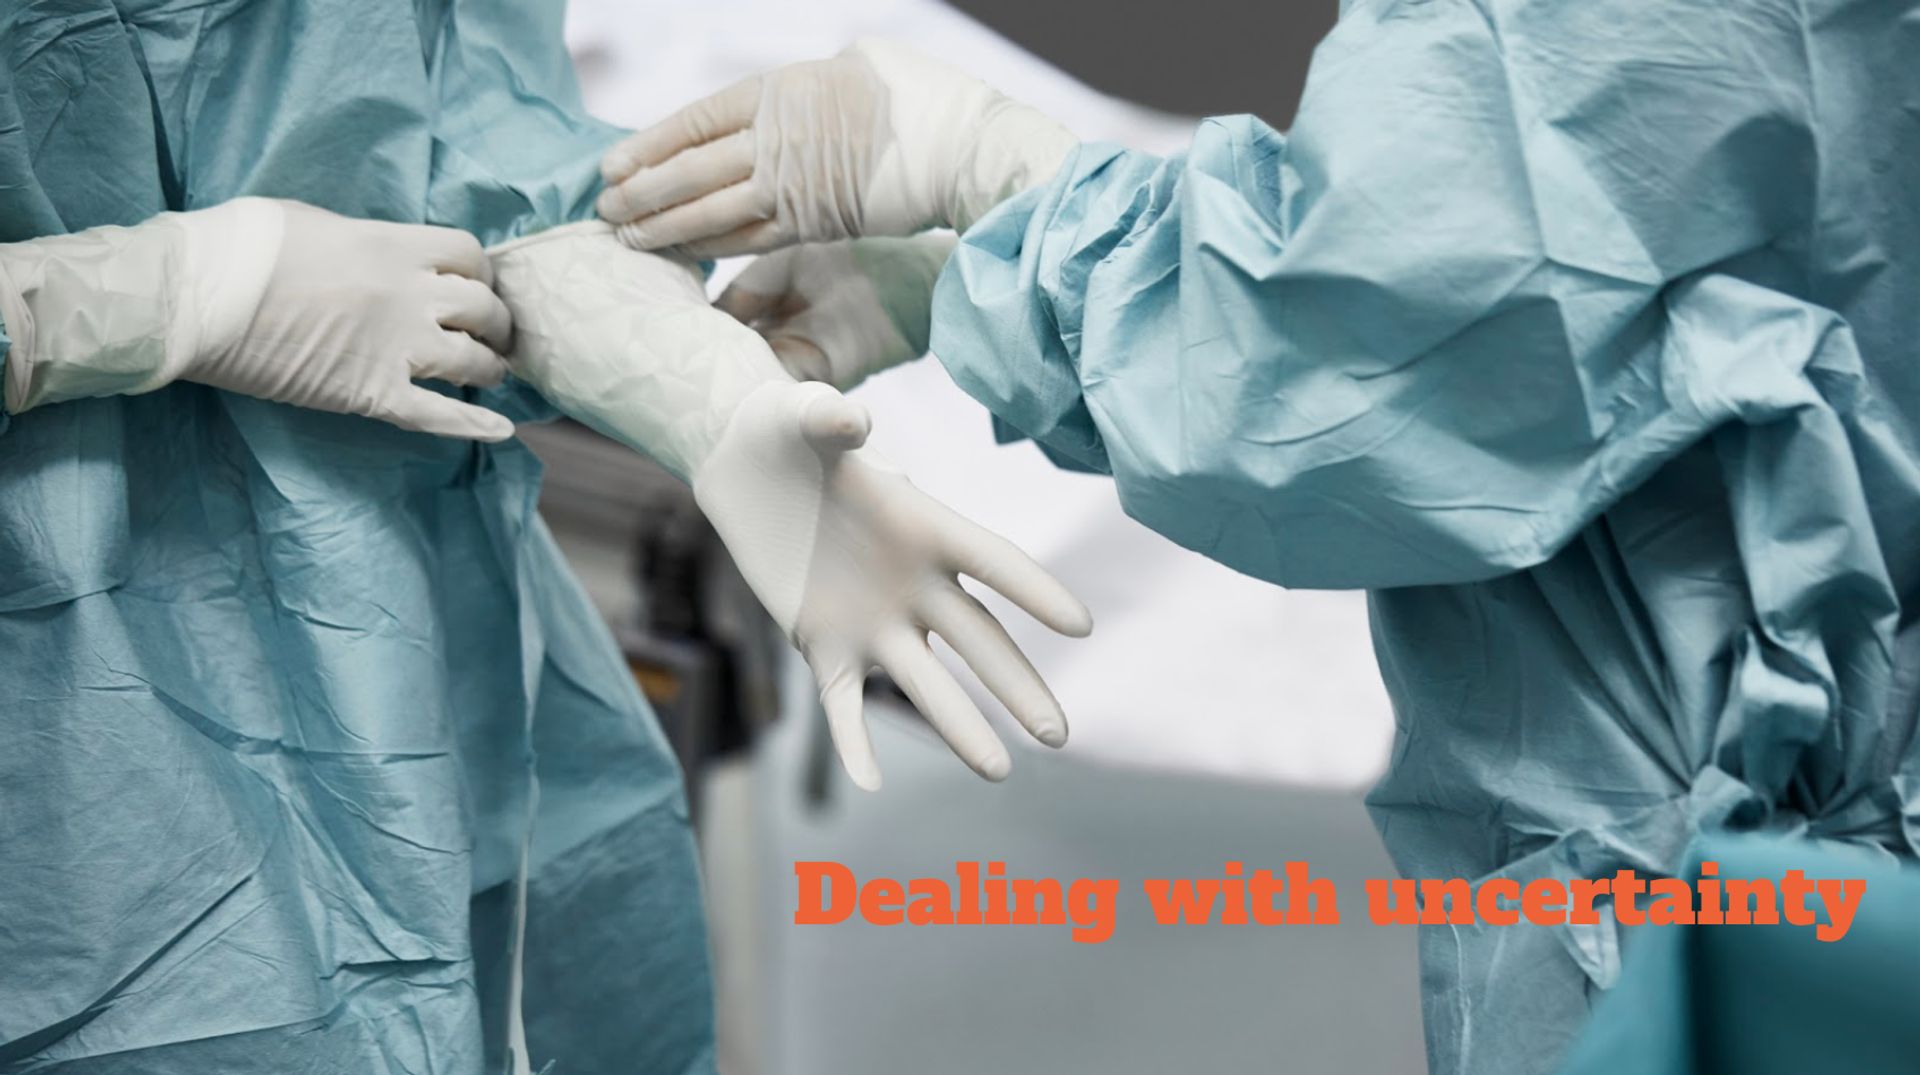 Photo of surgeons putting on medical gloves